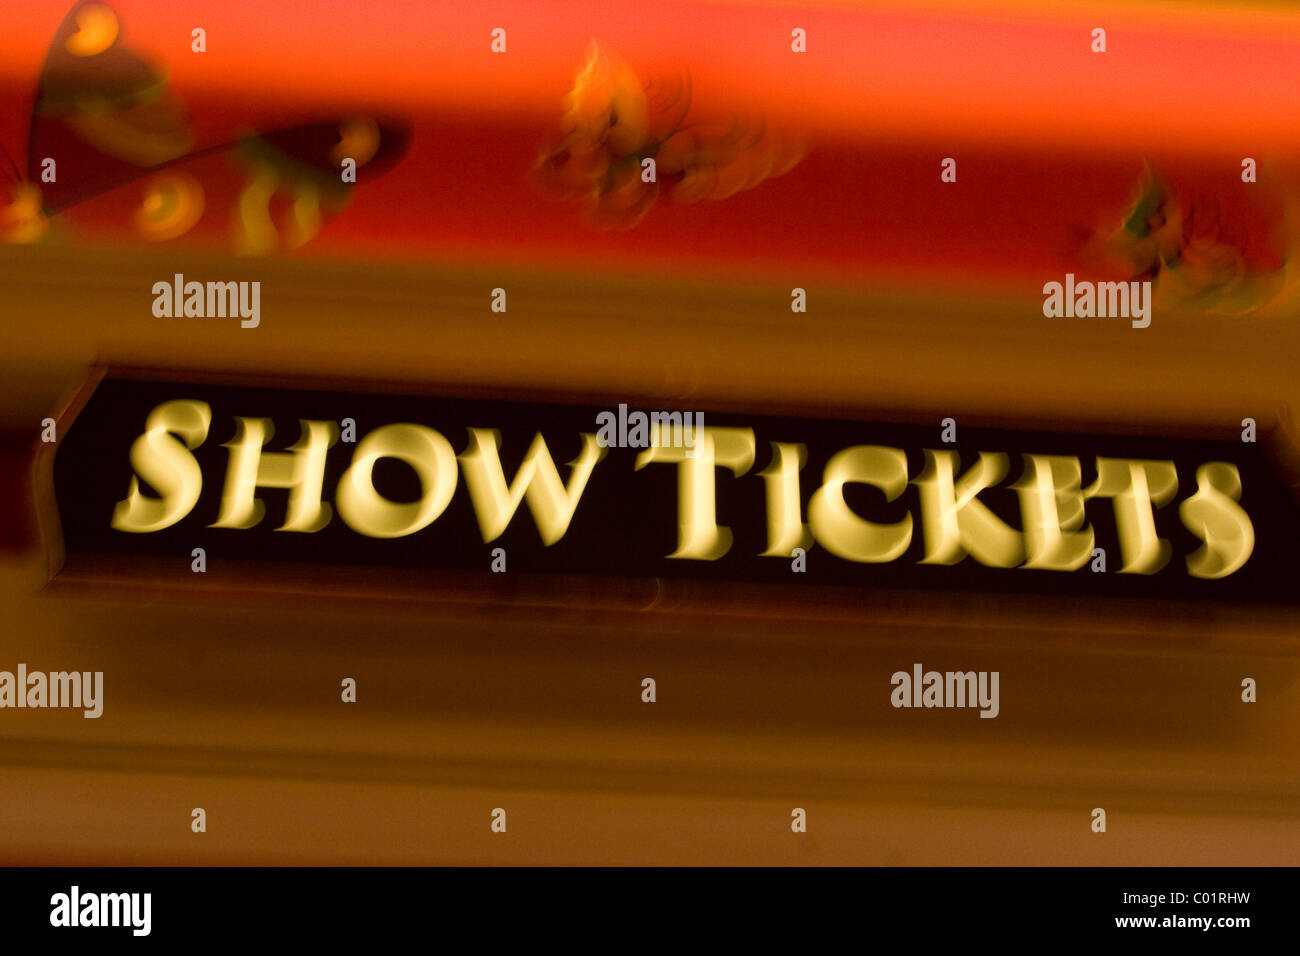 Show tickets sign at a Las Vegas Casino, Nevada, USA. Stock Photo